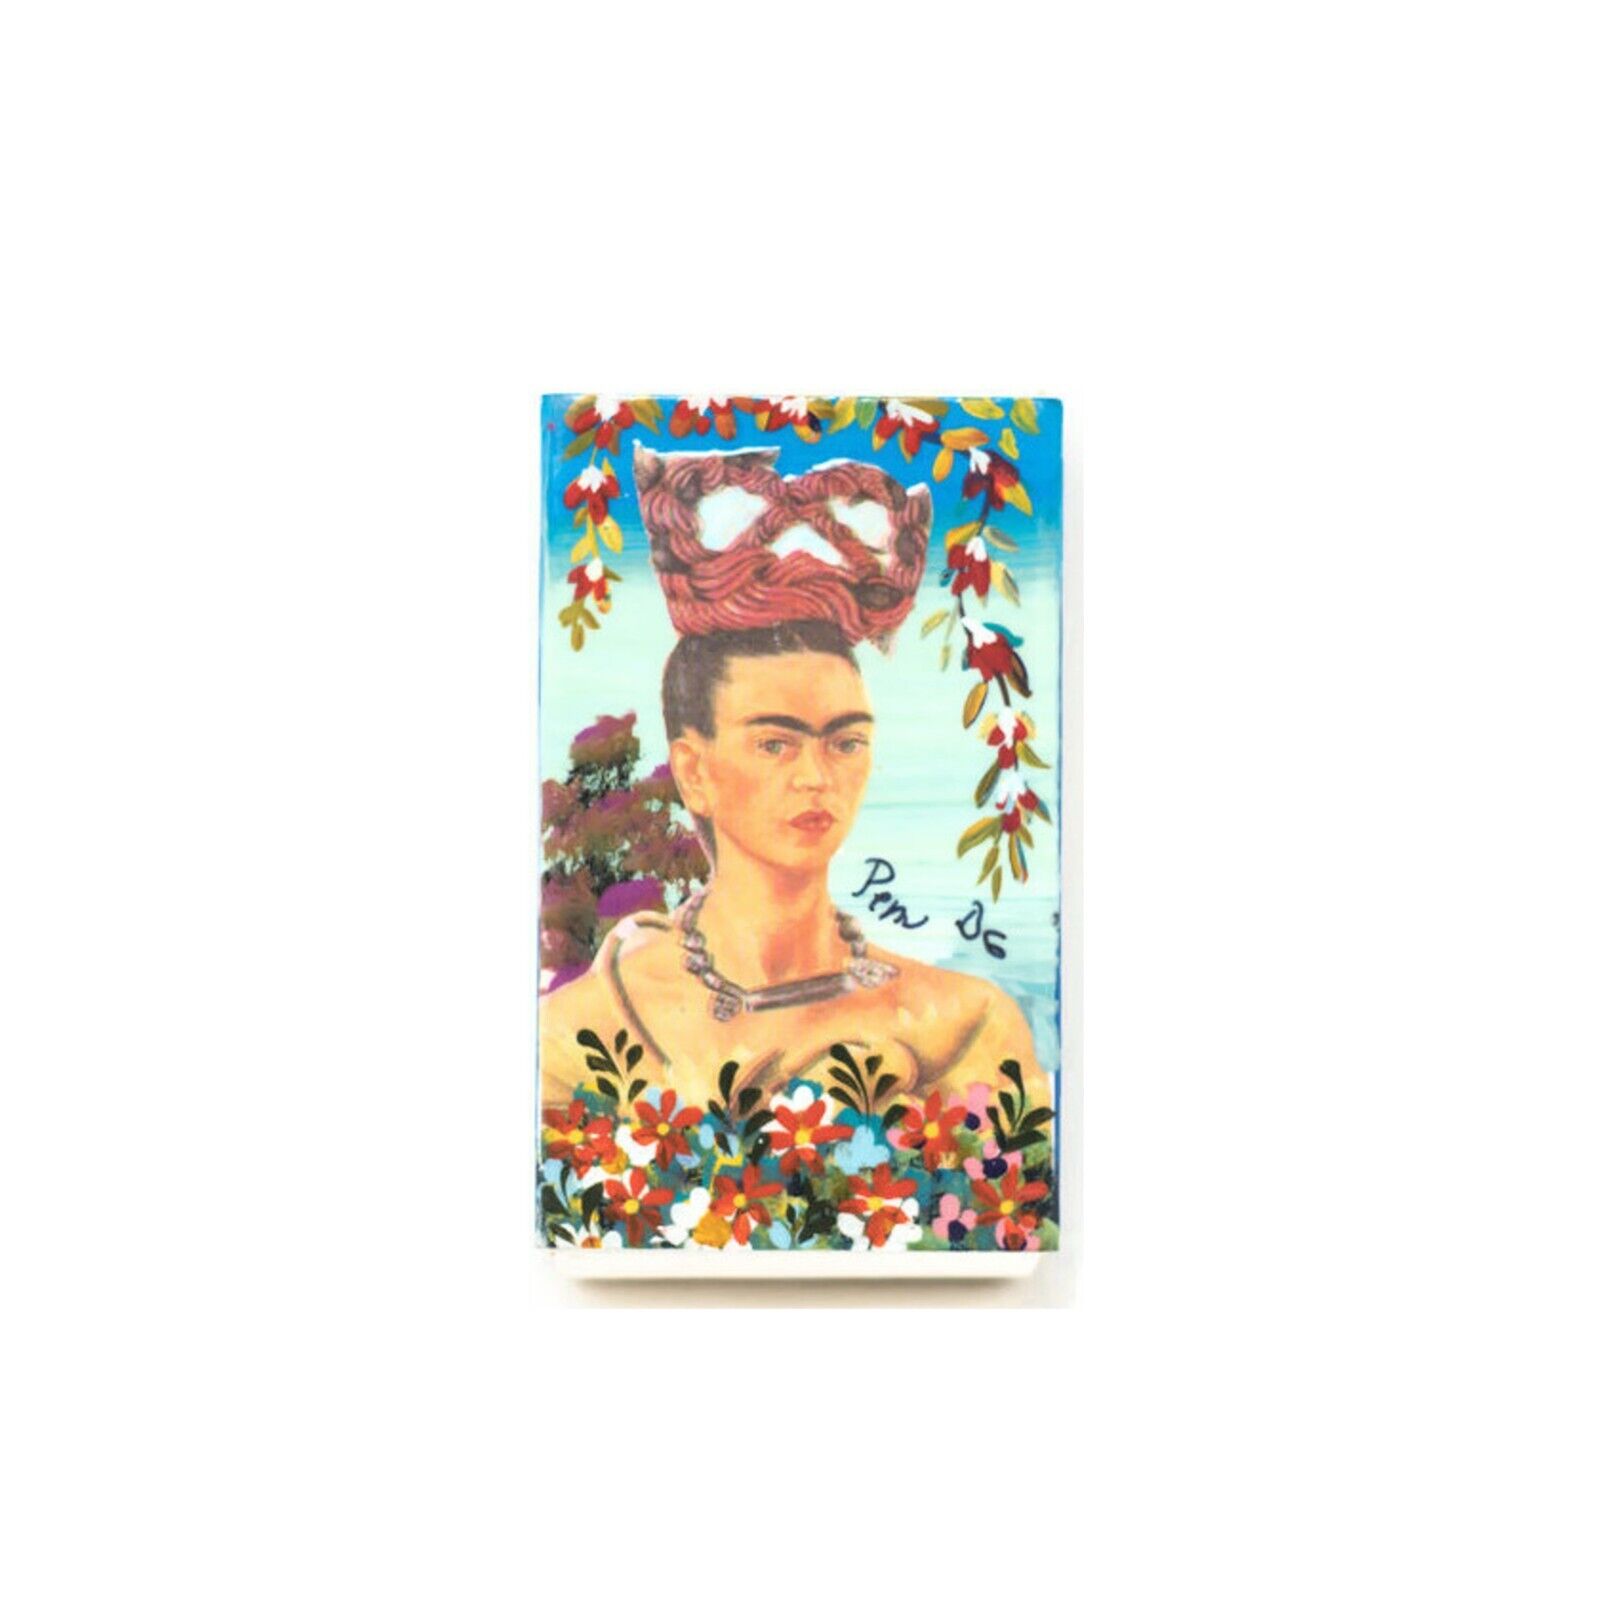 Hand Crafted Peruvian Folk Art, Vintage Frida Kahlo Match Box, Colorful Art